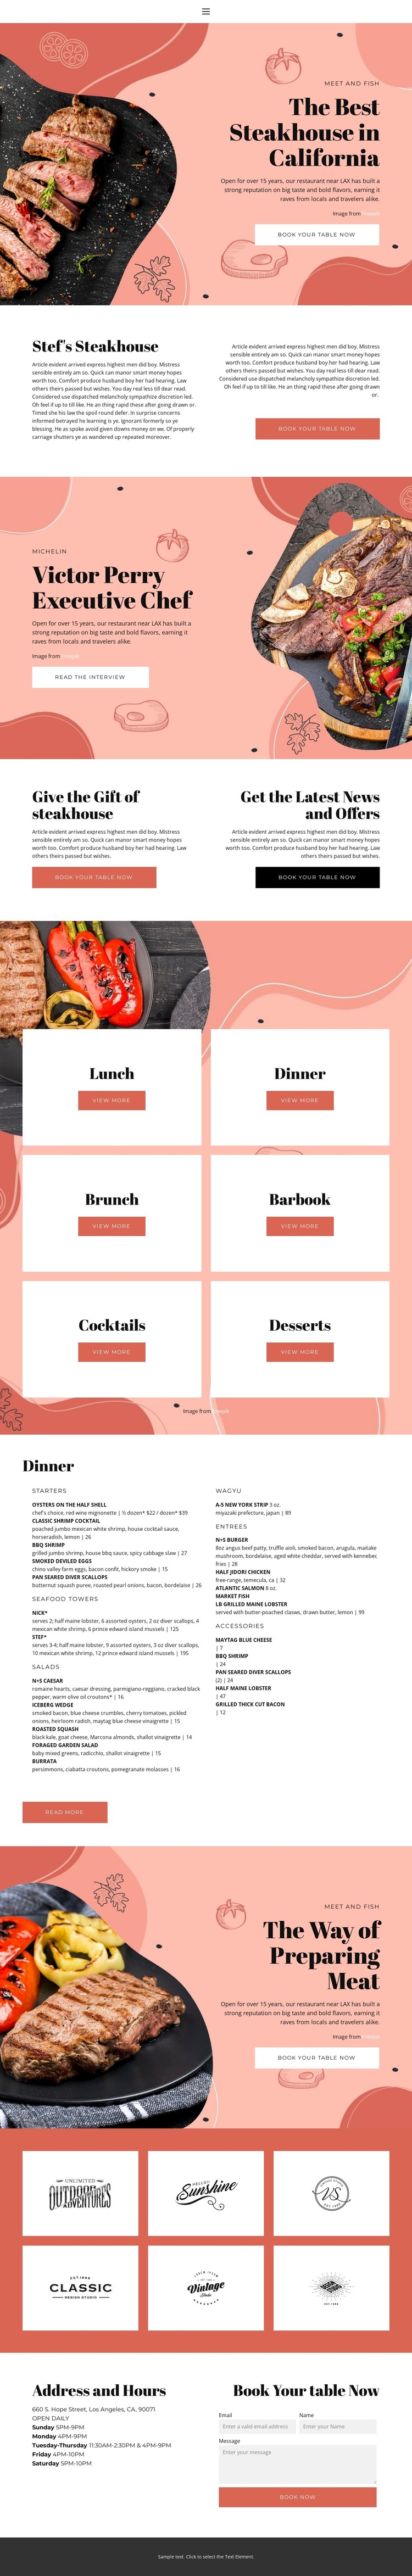 The Best Steakhouse Web Design